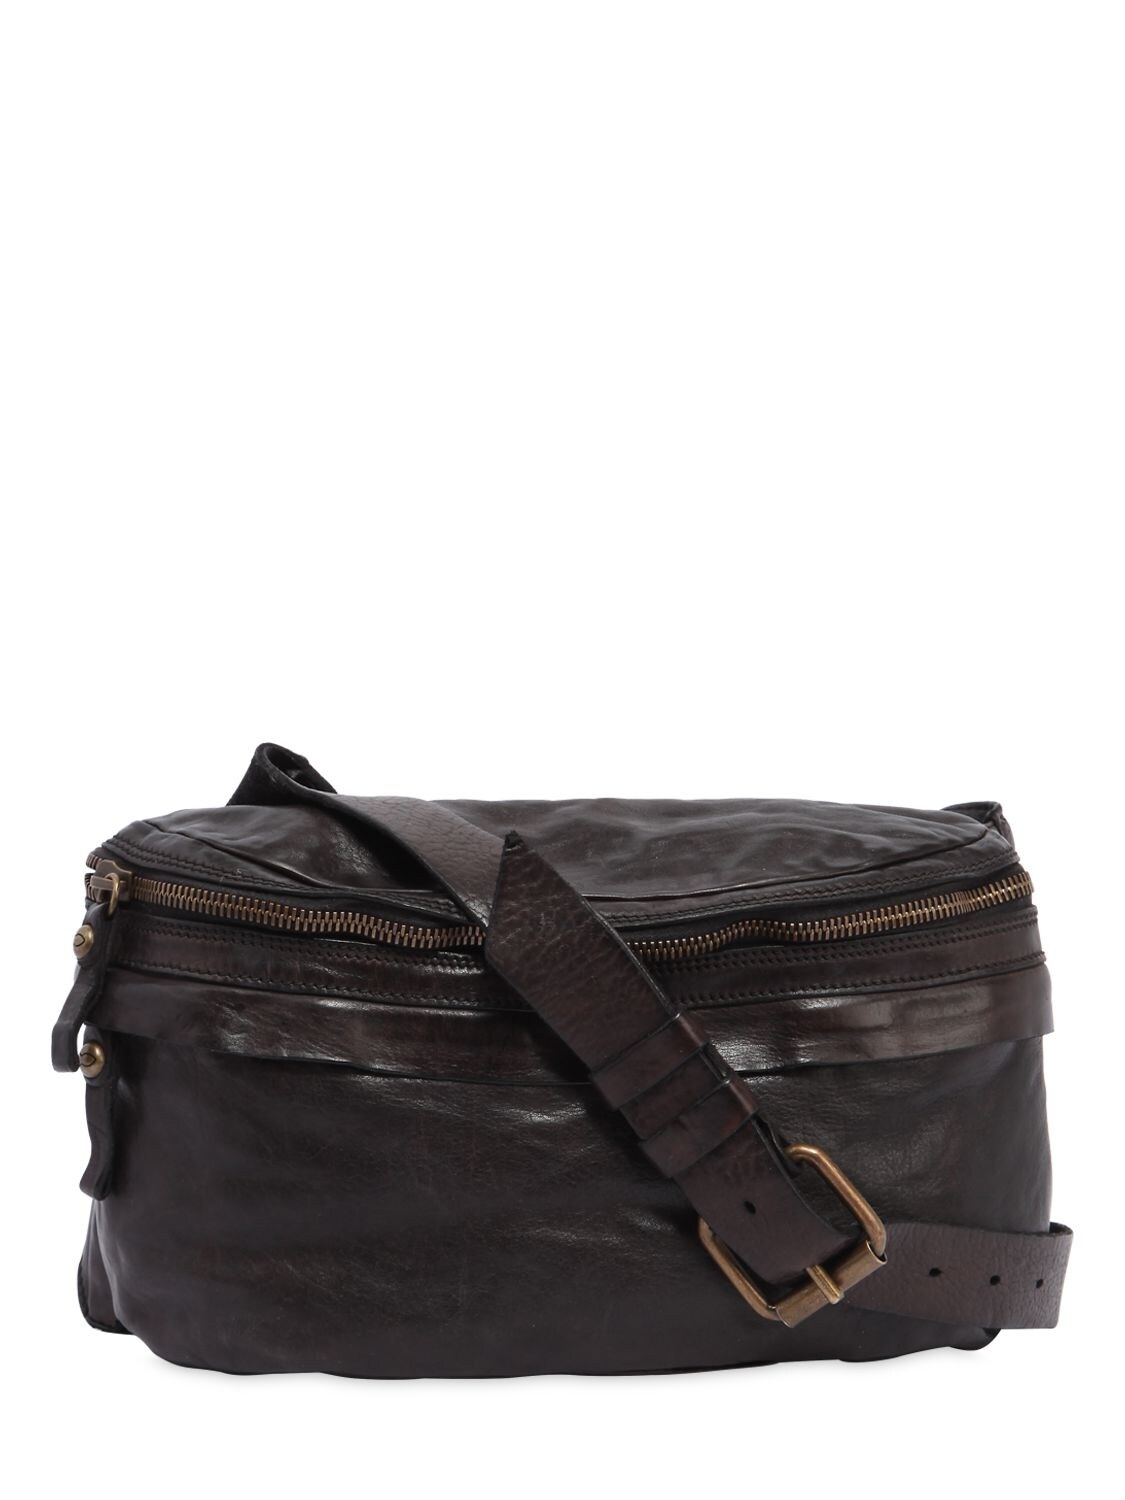 Campomaggi Vintage Effect Leather Belt Pack In Grey Brown